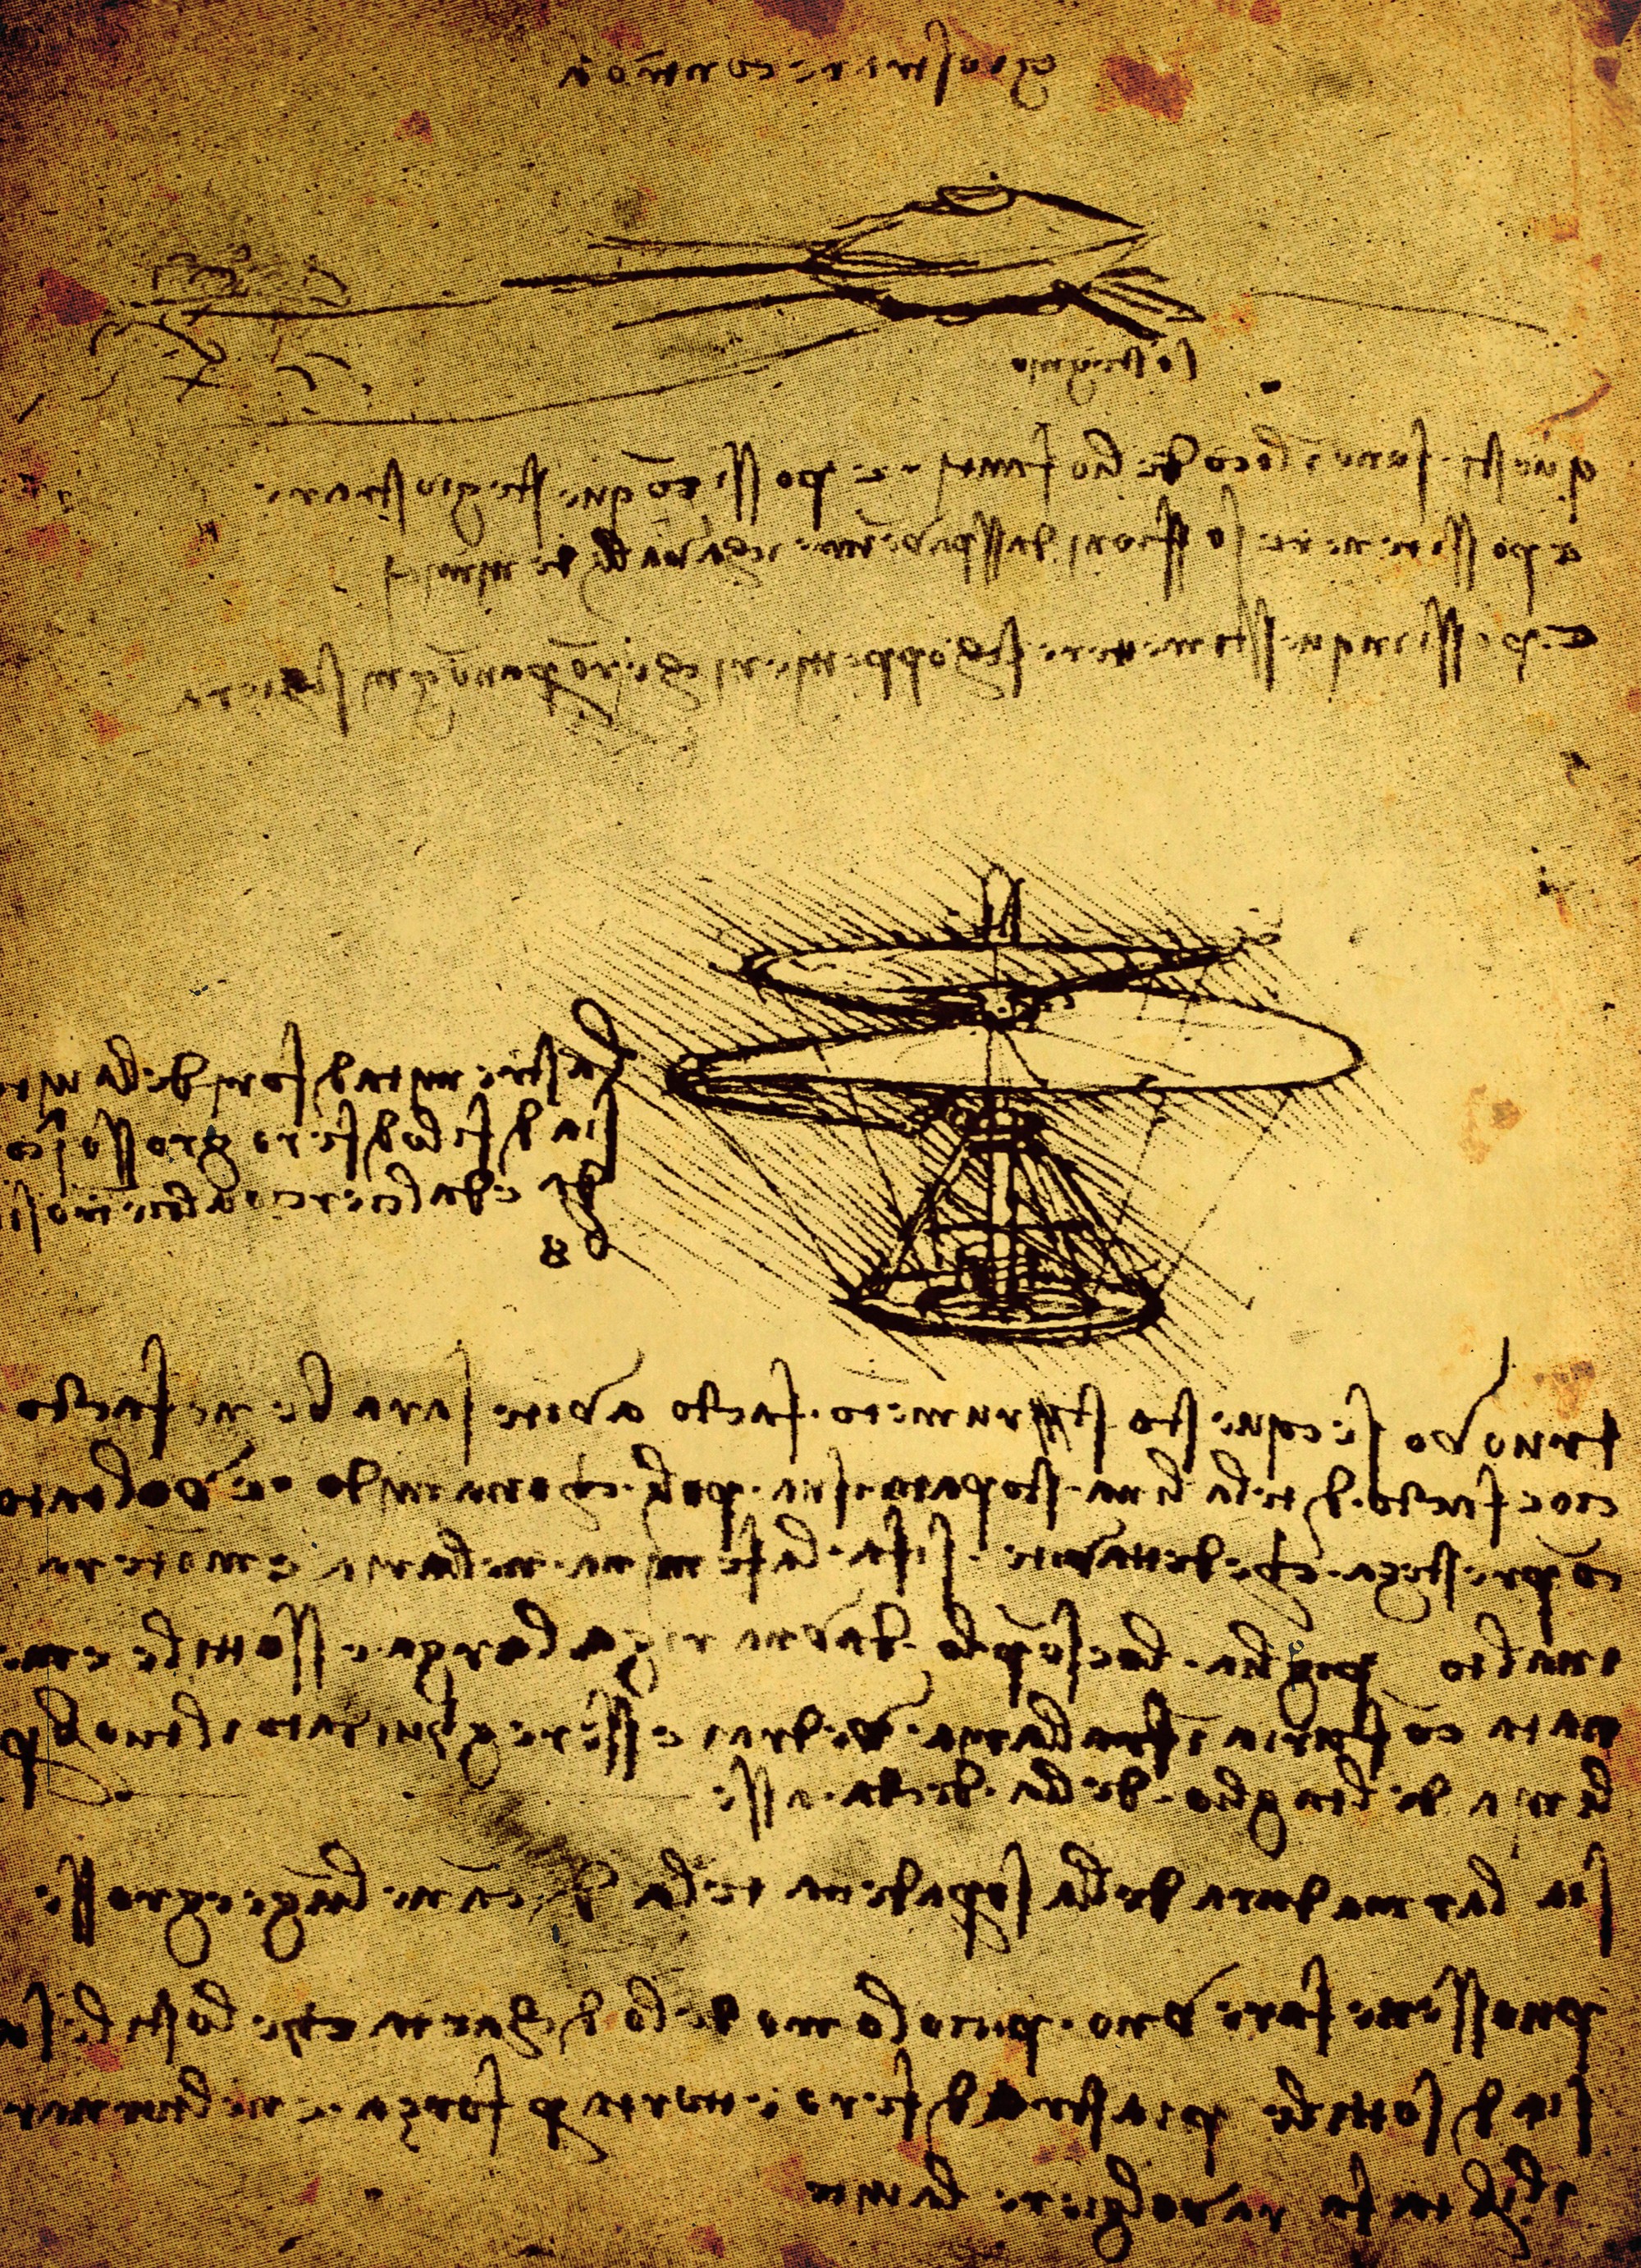 L'hélicoptère version da Vinci.